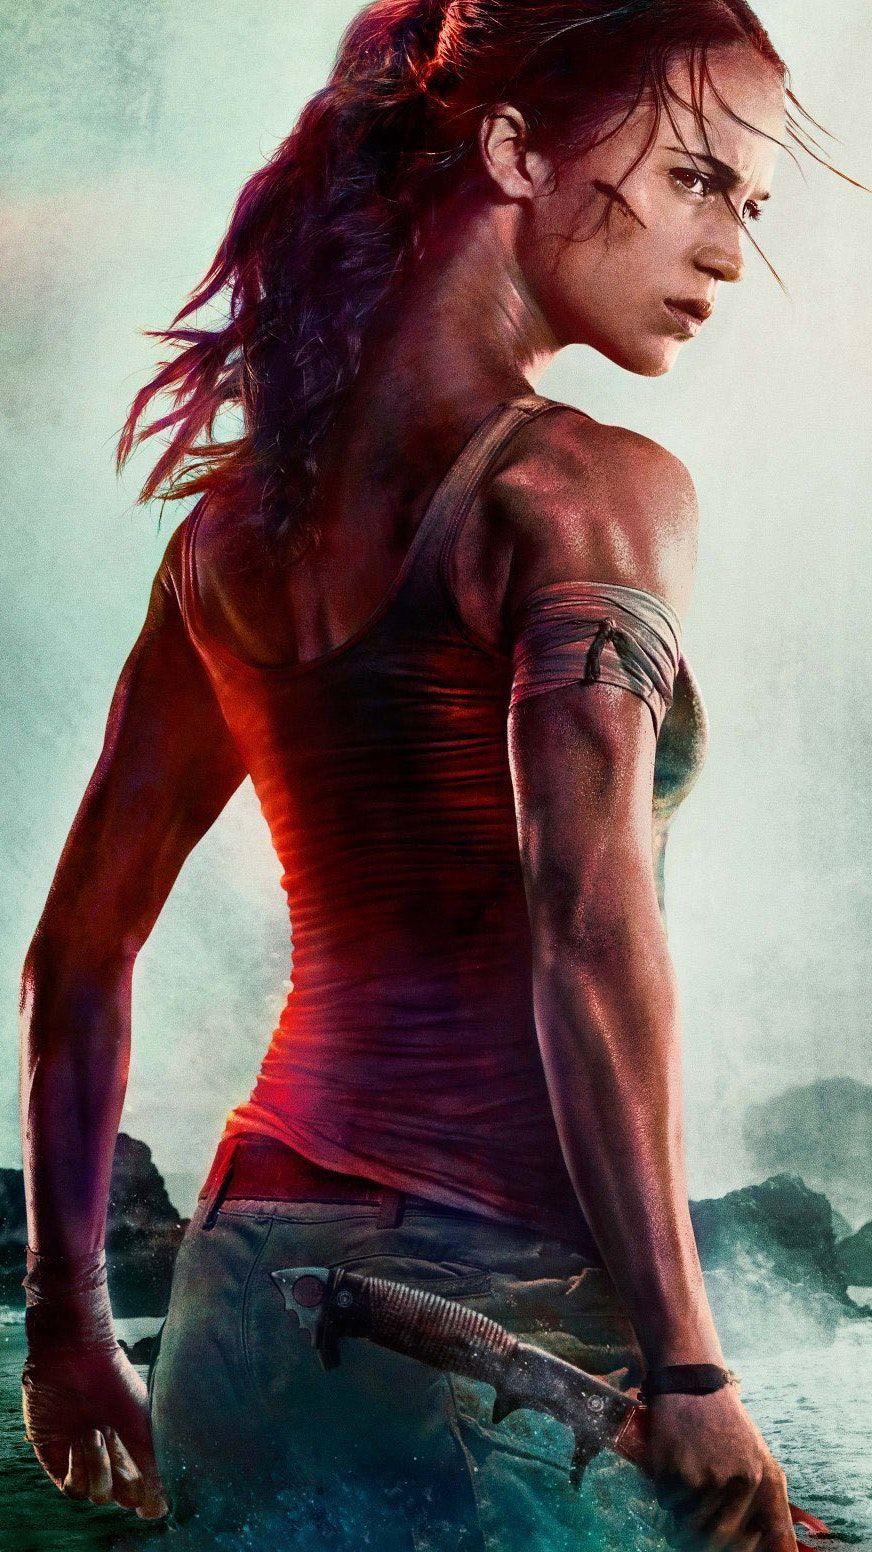 Tomb Raider (2018) Phone Wallpaper. Movie wallpaper and Movie